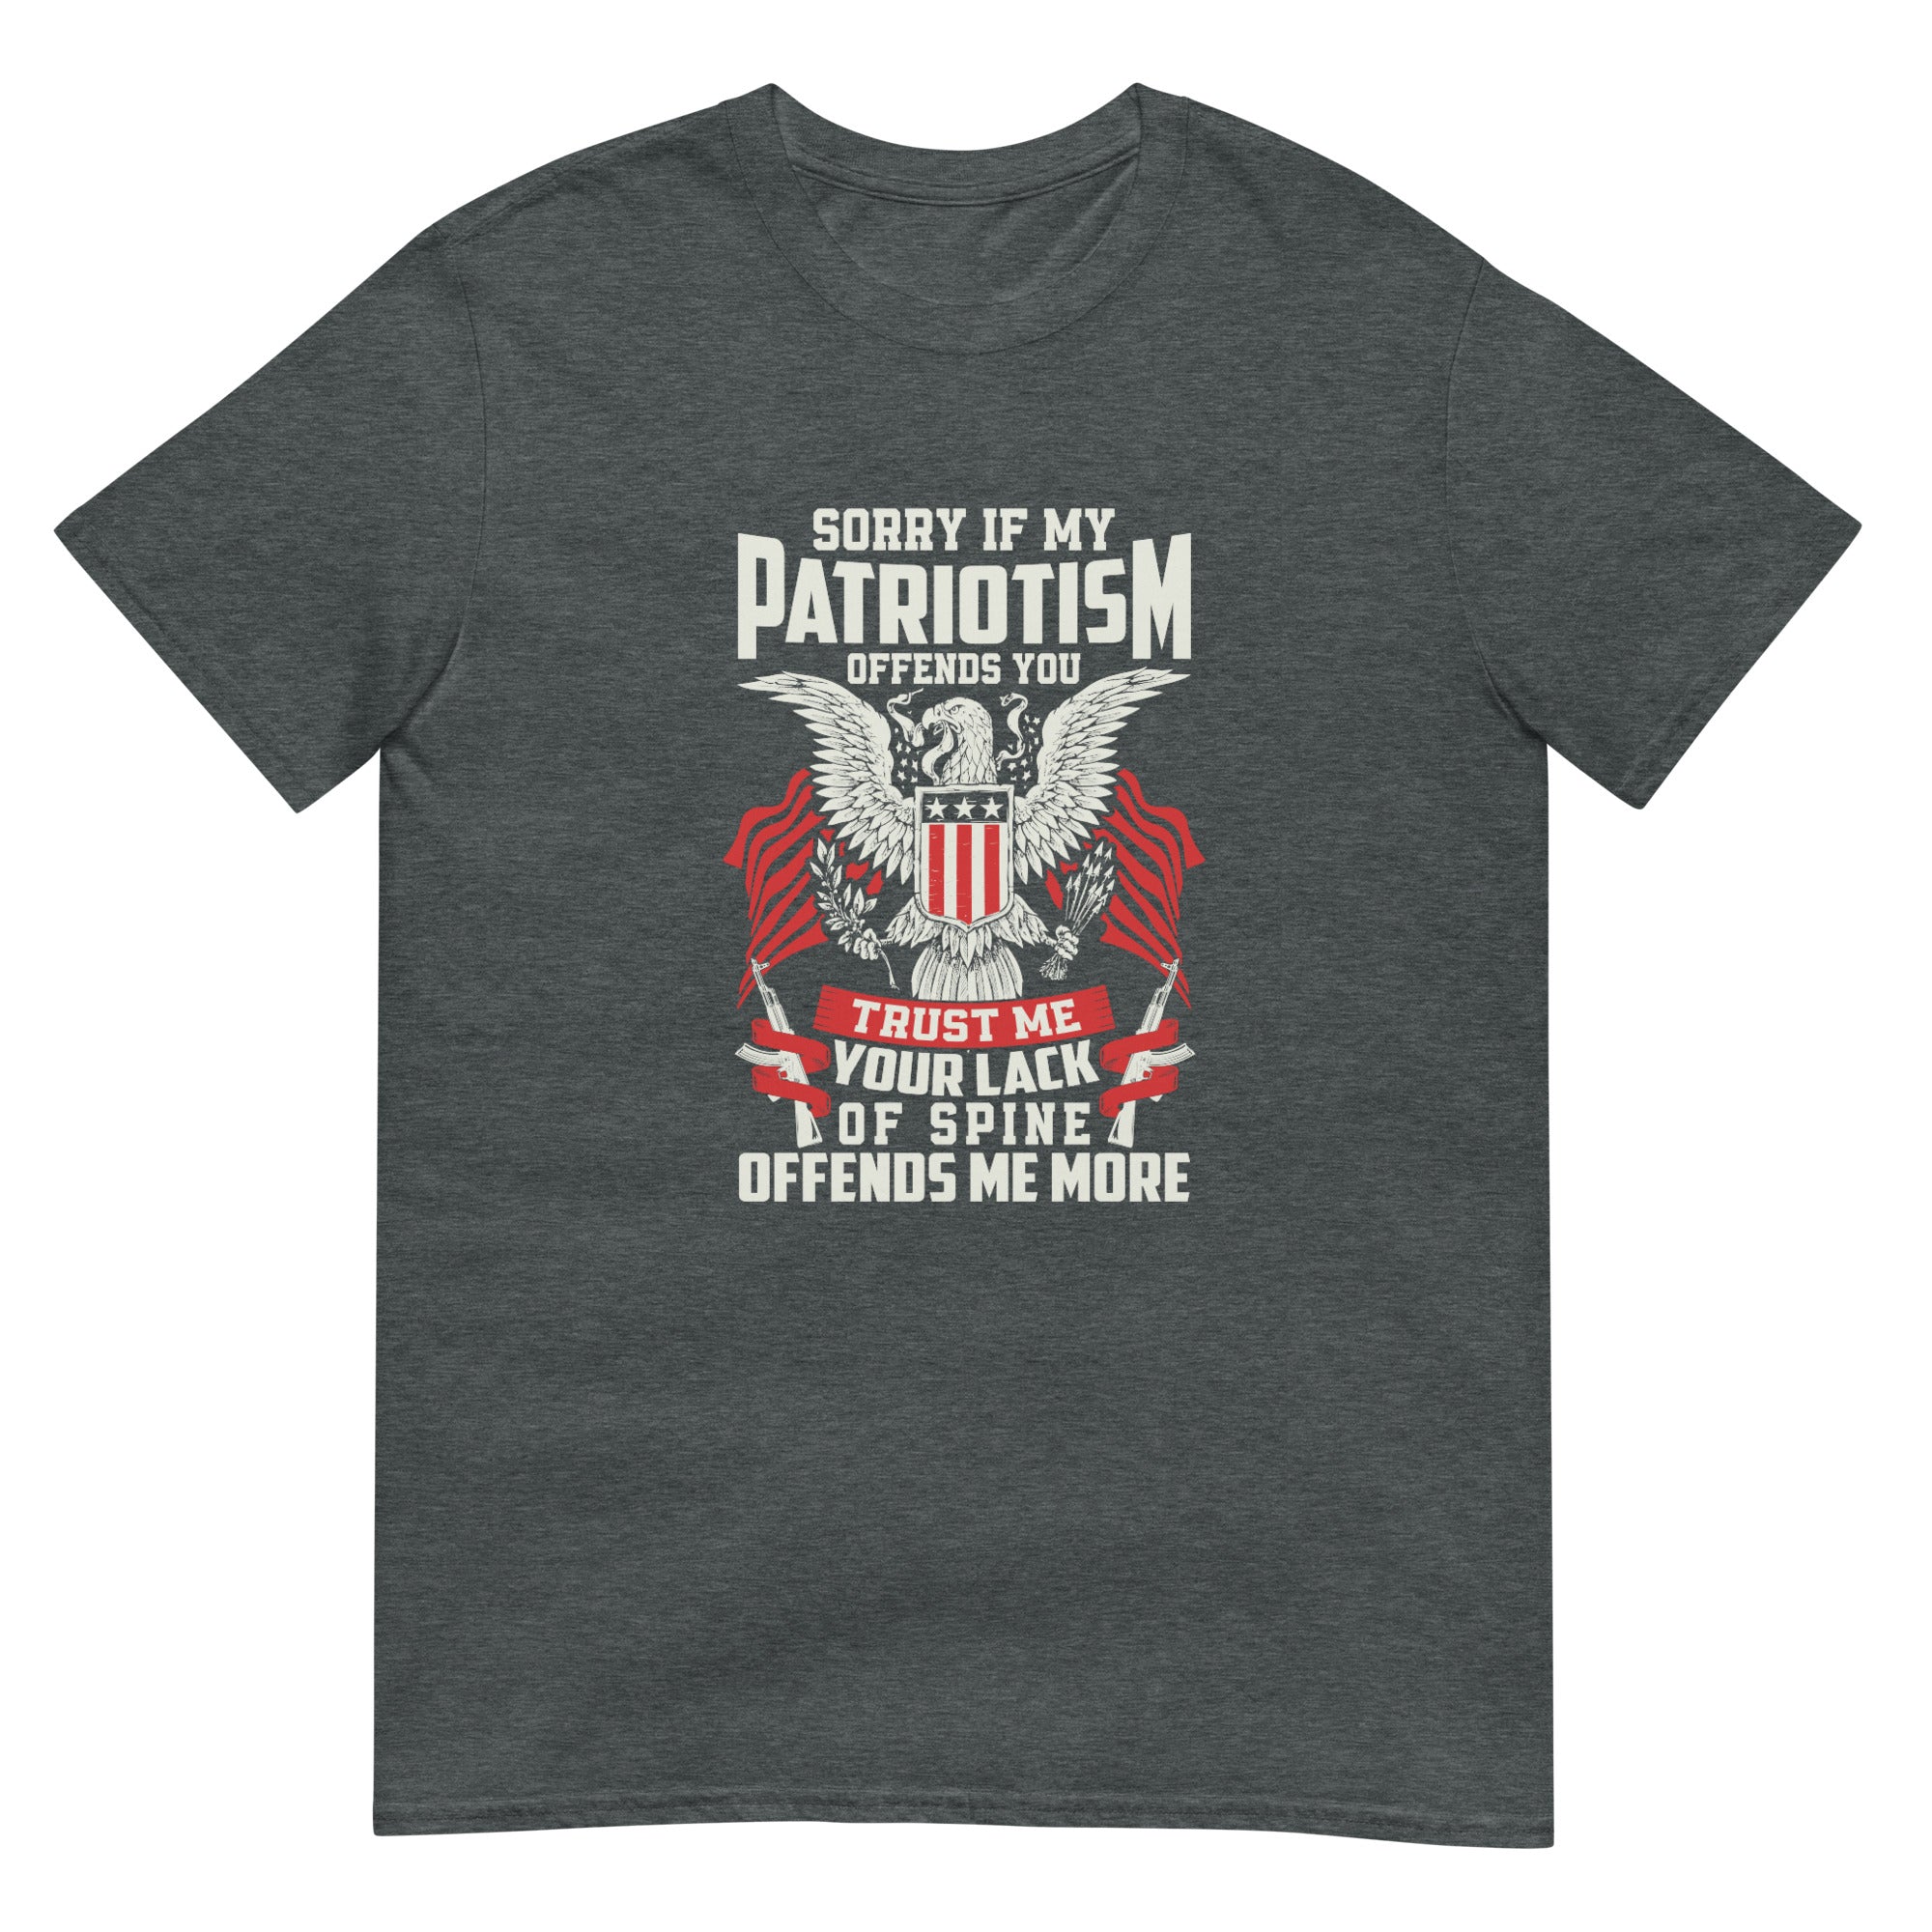 My Patriotism Offends You Short-Sleeve Unisex T-Shirt